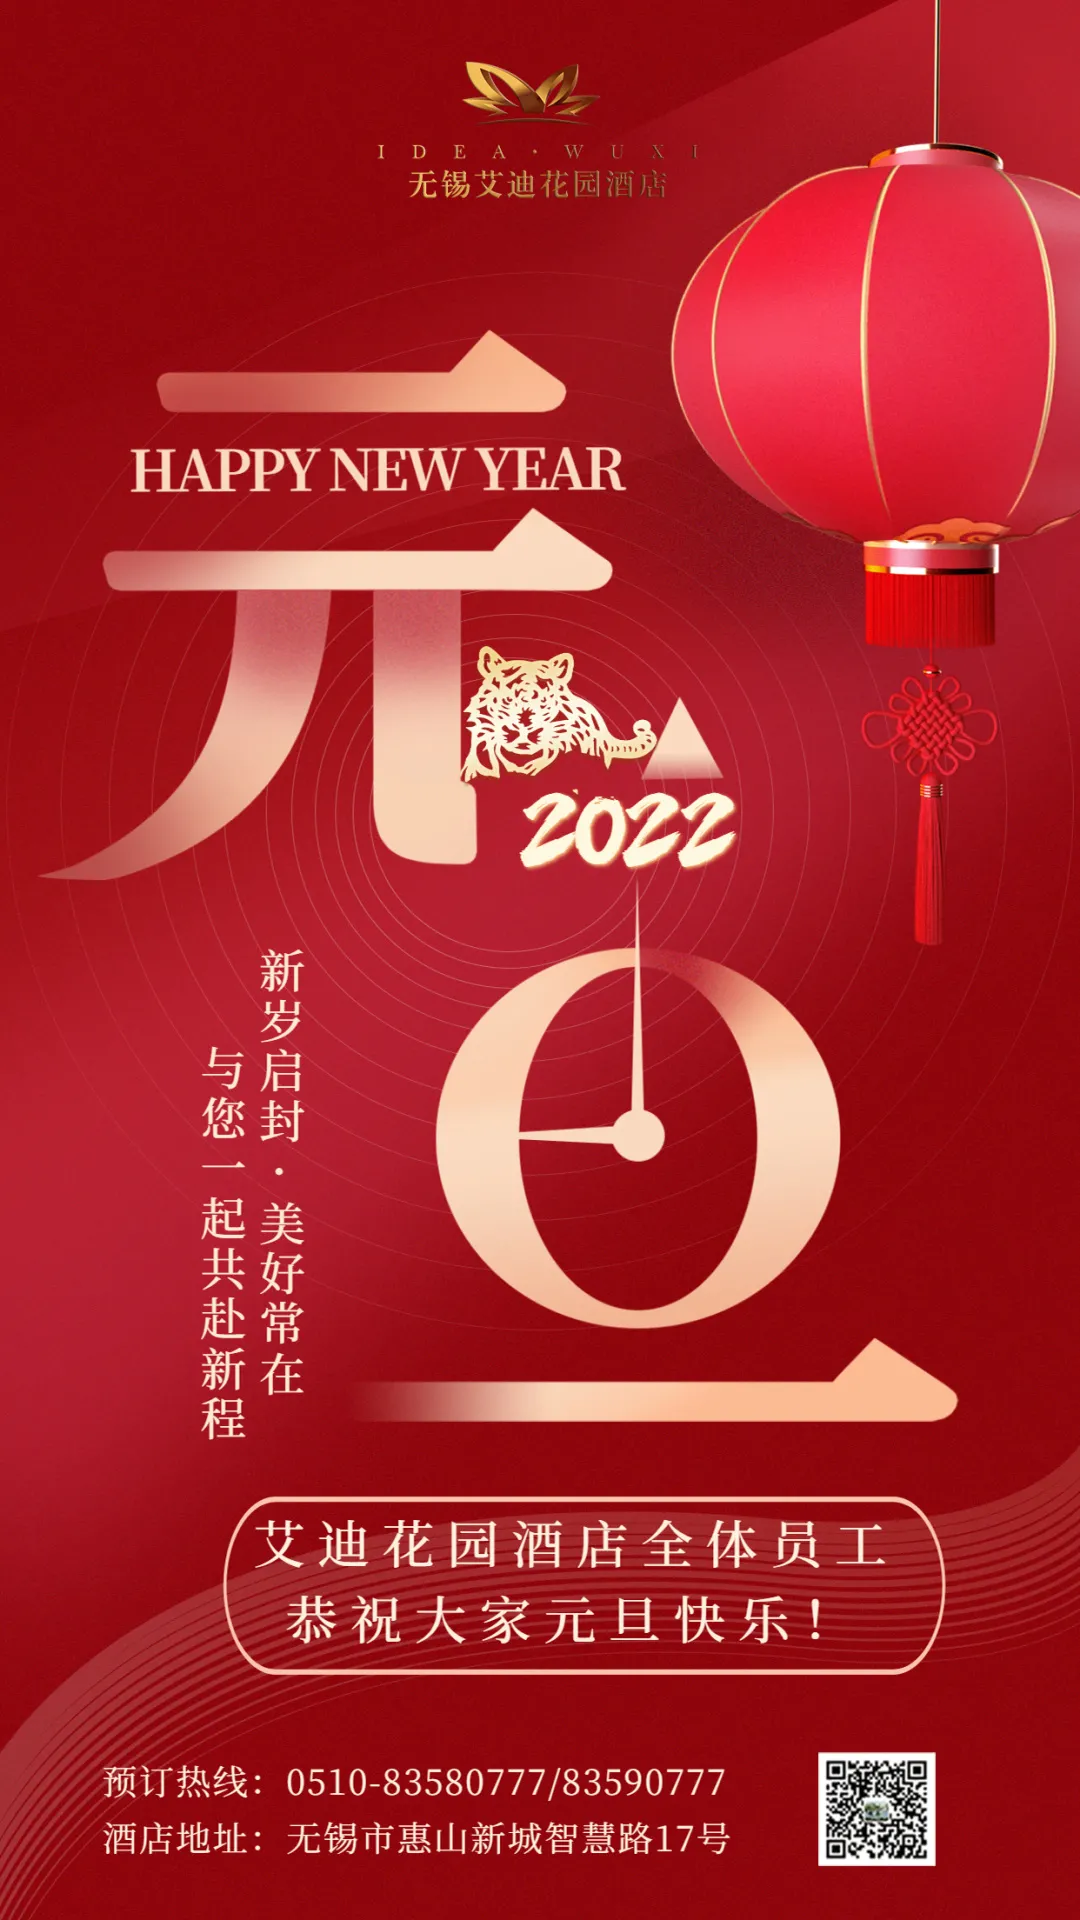 Happy new year！艾迪花园酒店恭祝大家元旦快乐！